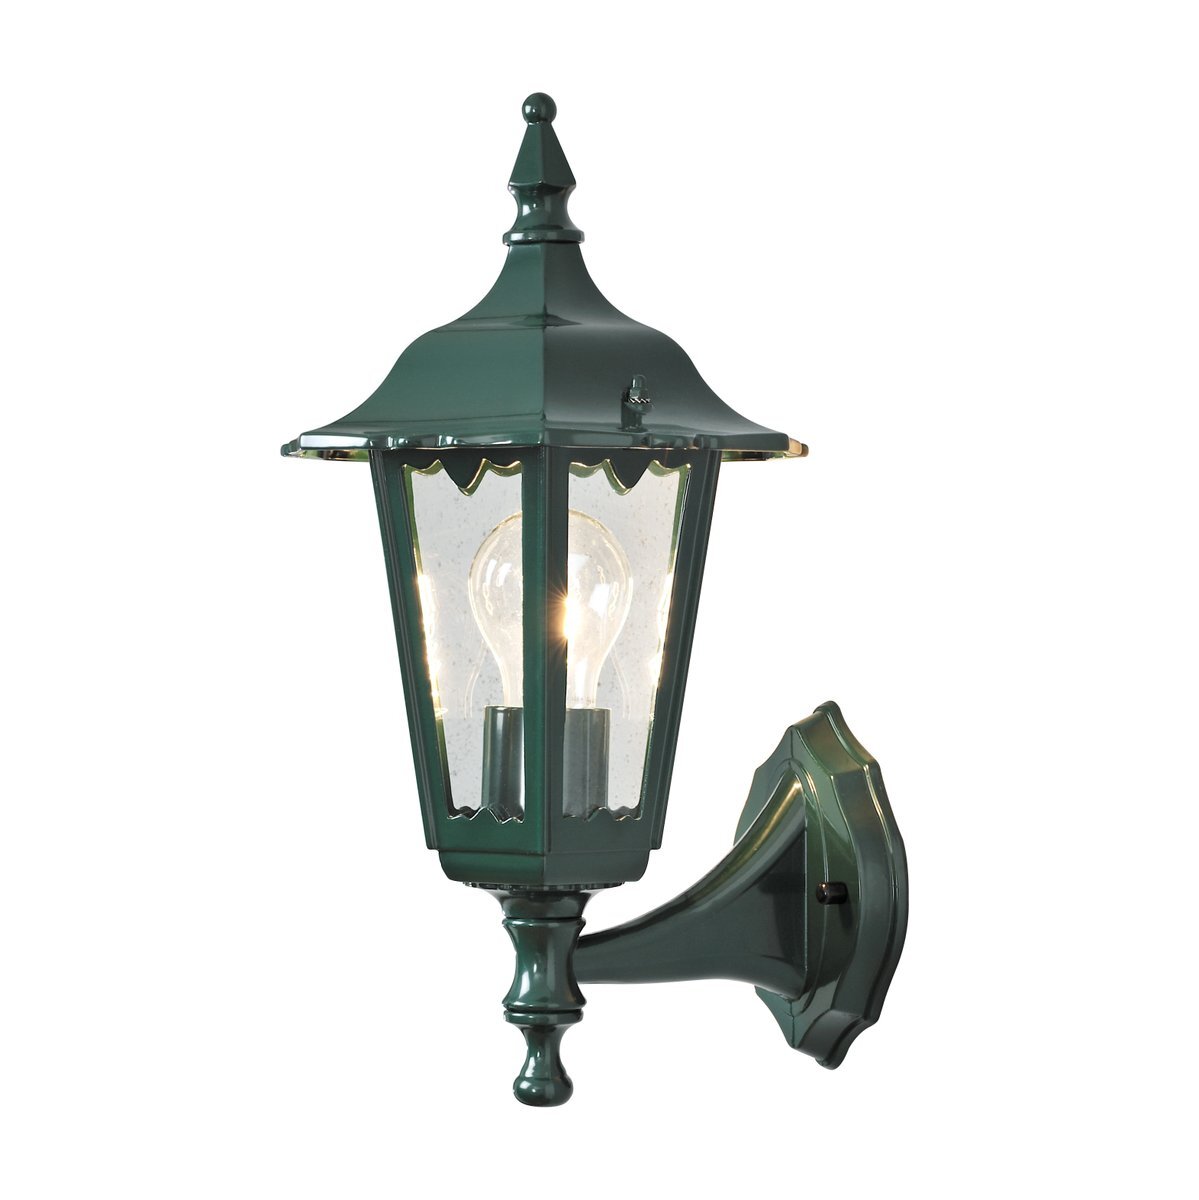 KONSTSMIDE Firenze Wandlamp opwaarts 36 cm 230 V E 27 groen